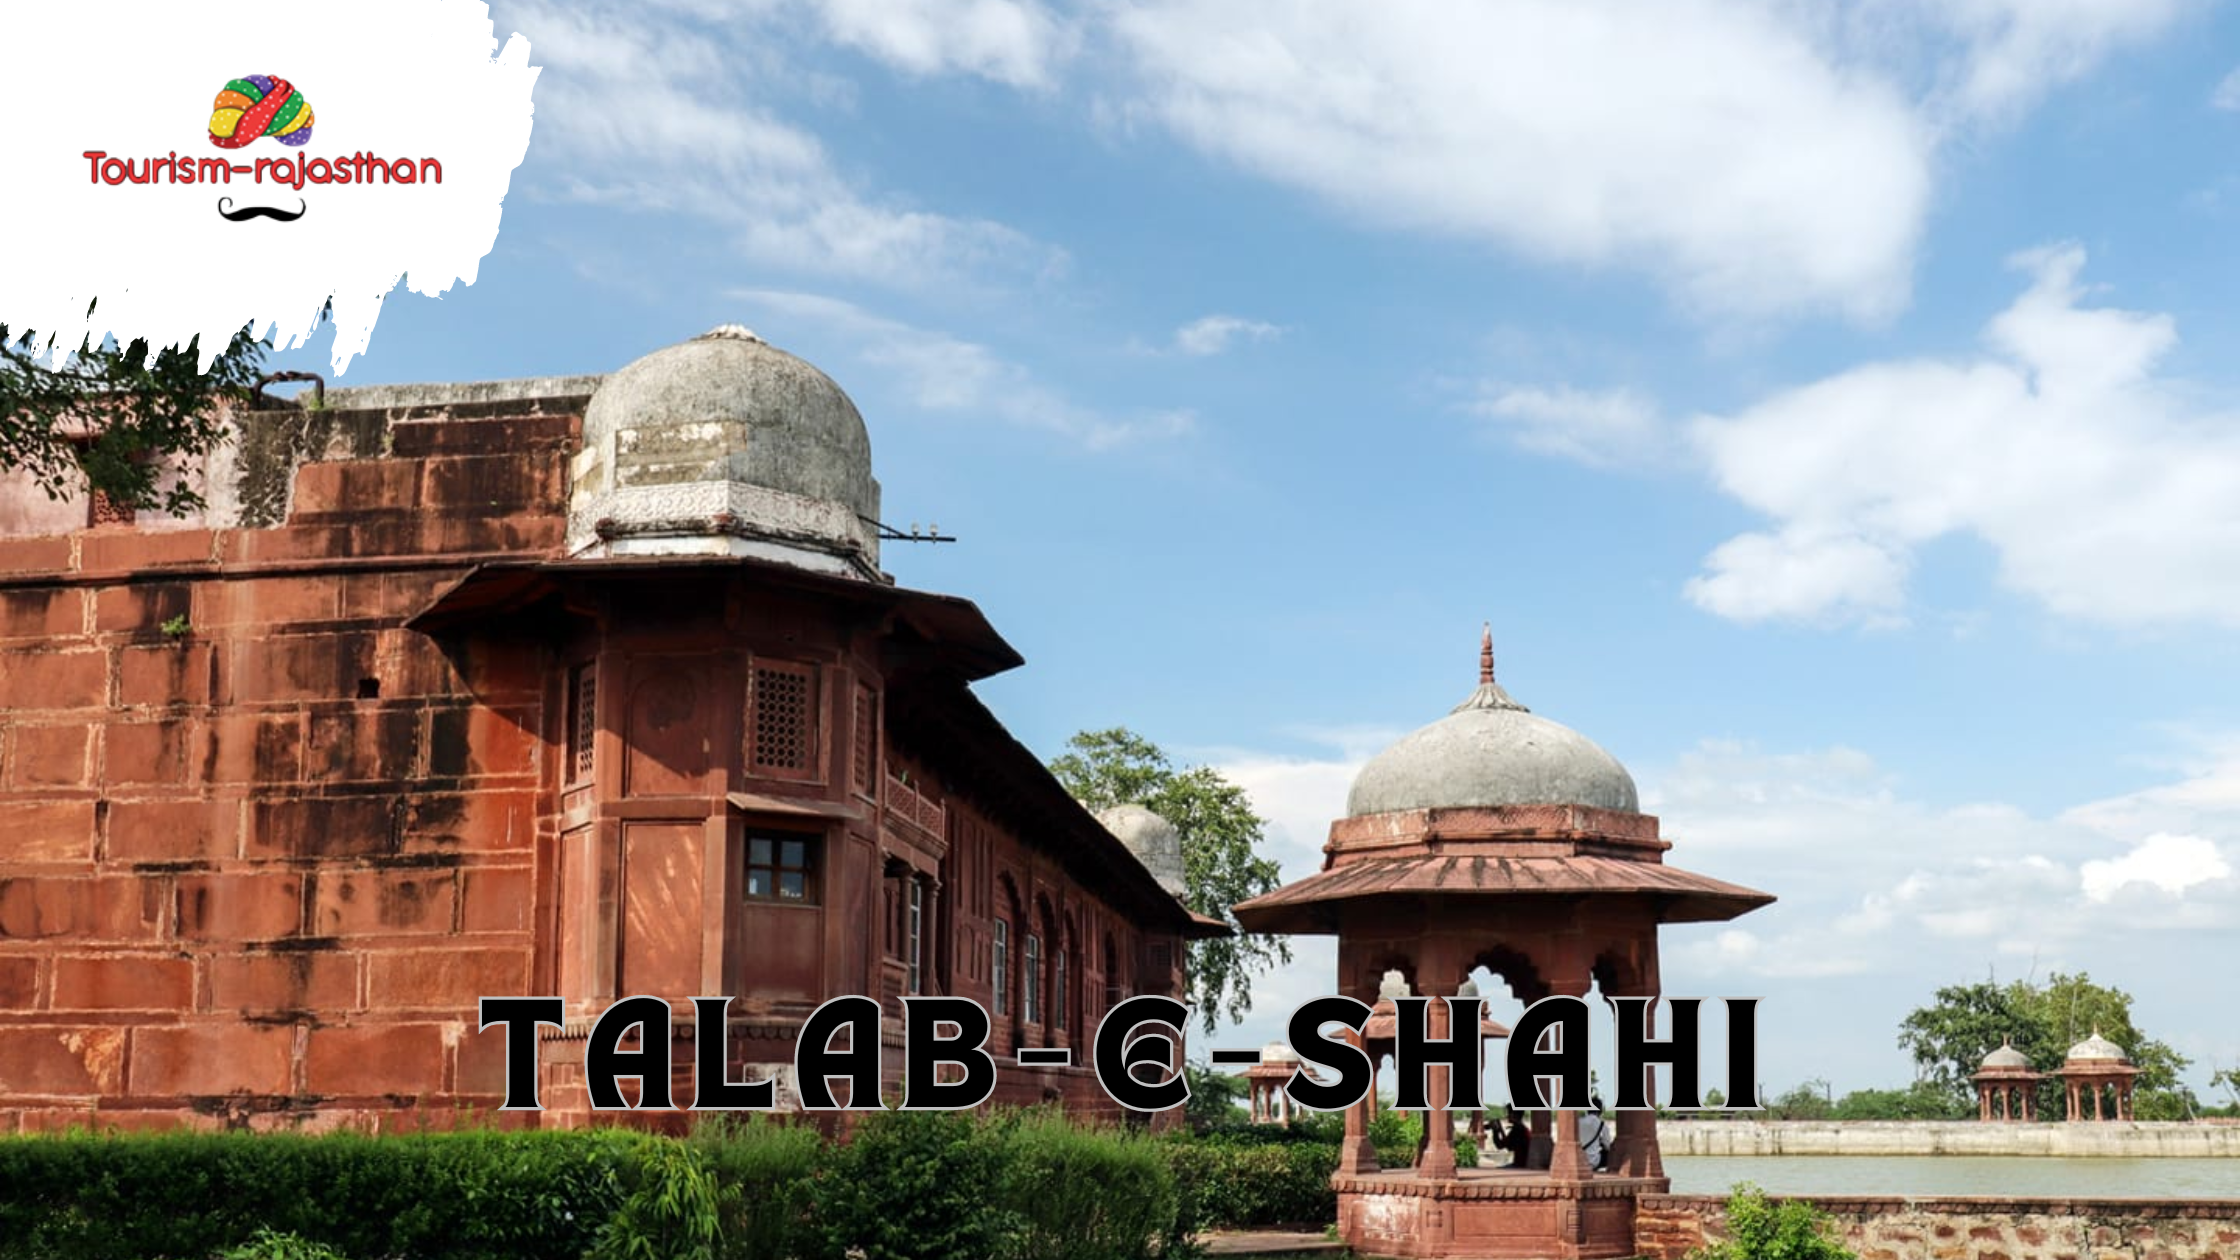 TALAB-E-SHAHI